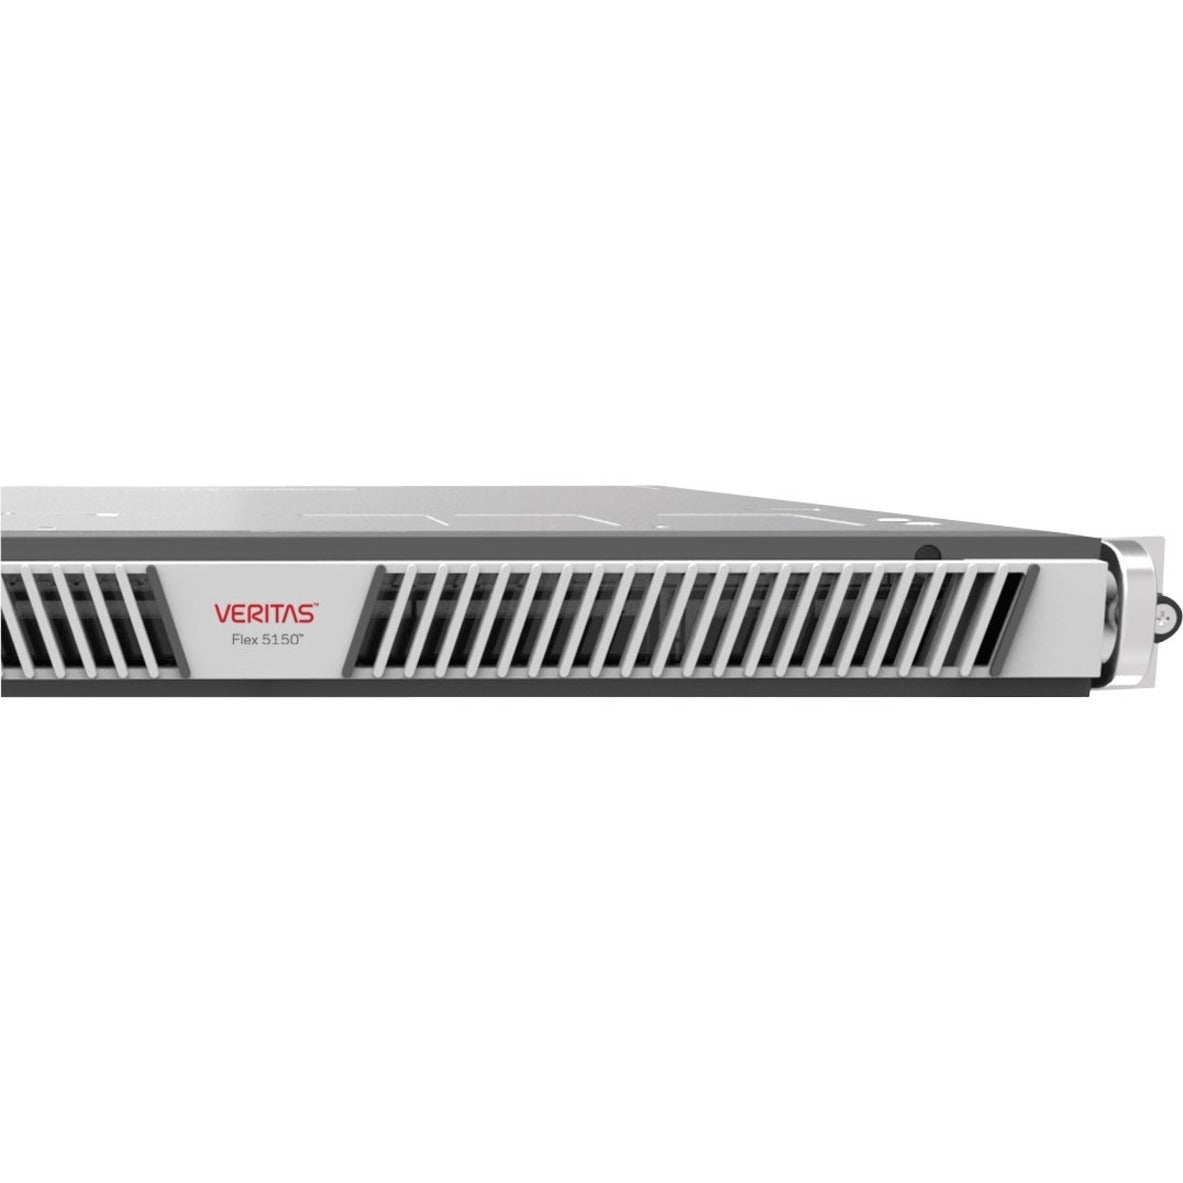 Veritas 26113-M0021 Flex System 5150 NAS Storage System, 15TB Total Hard Drive Capacity Installed, 12Gb/s SAS Controller, 6 Network (RJ-45) Ports